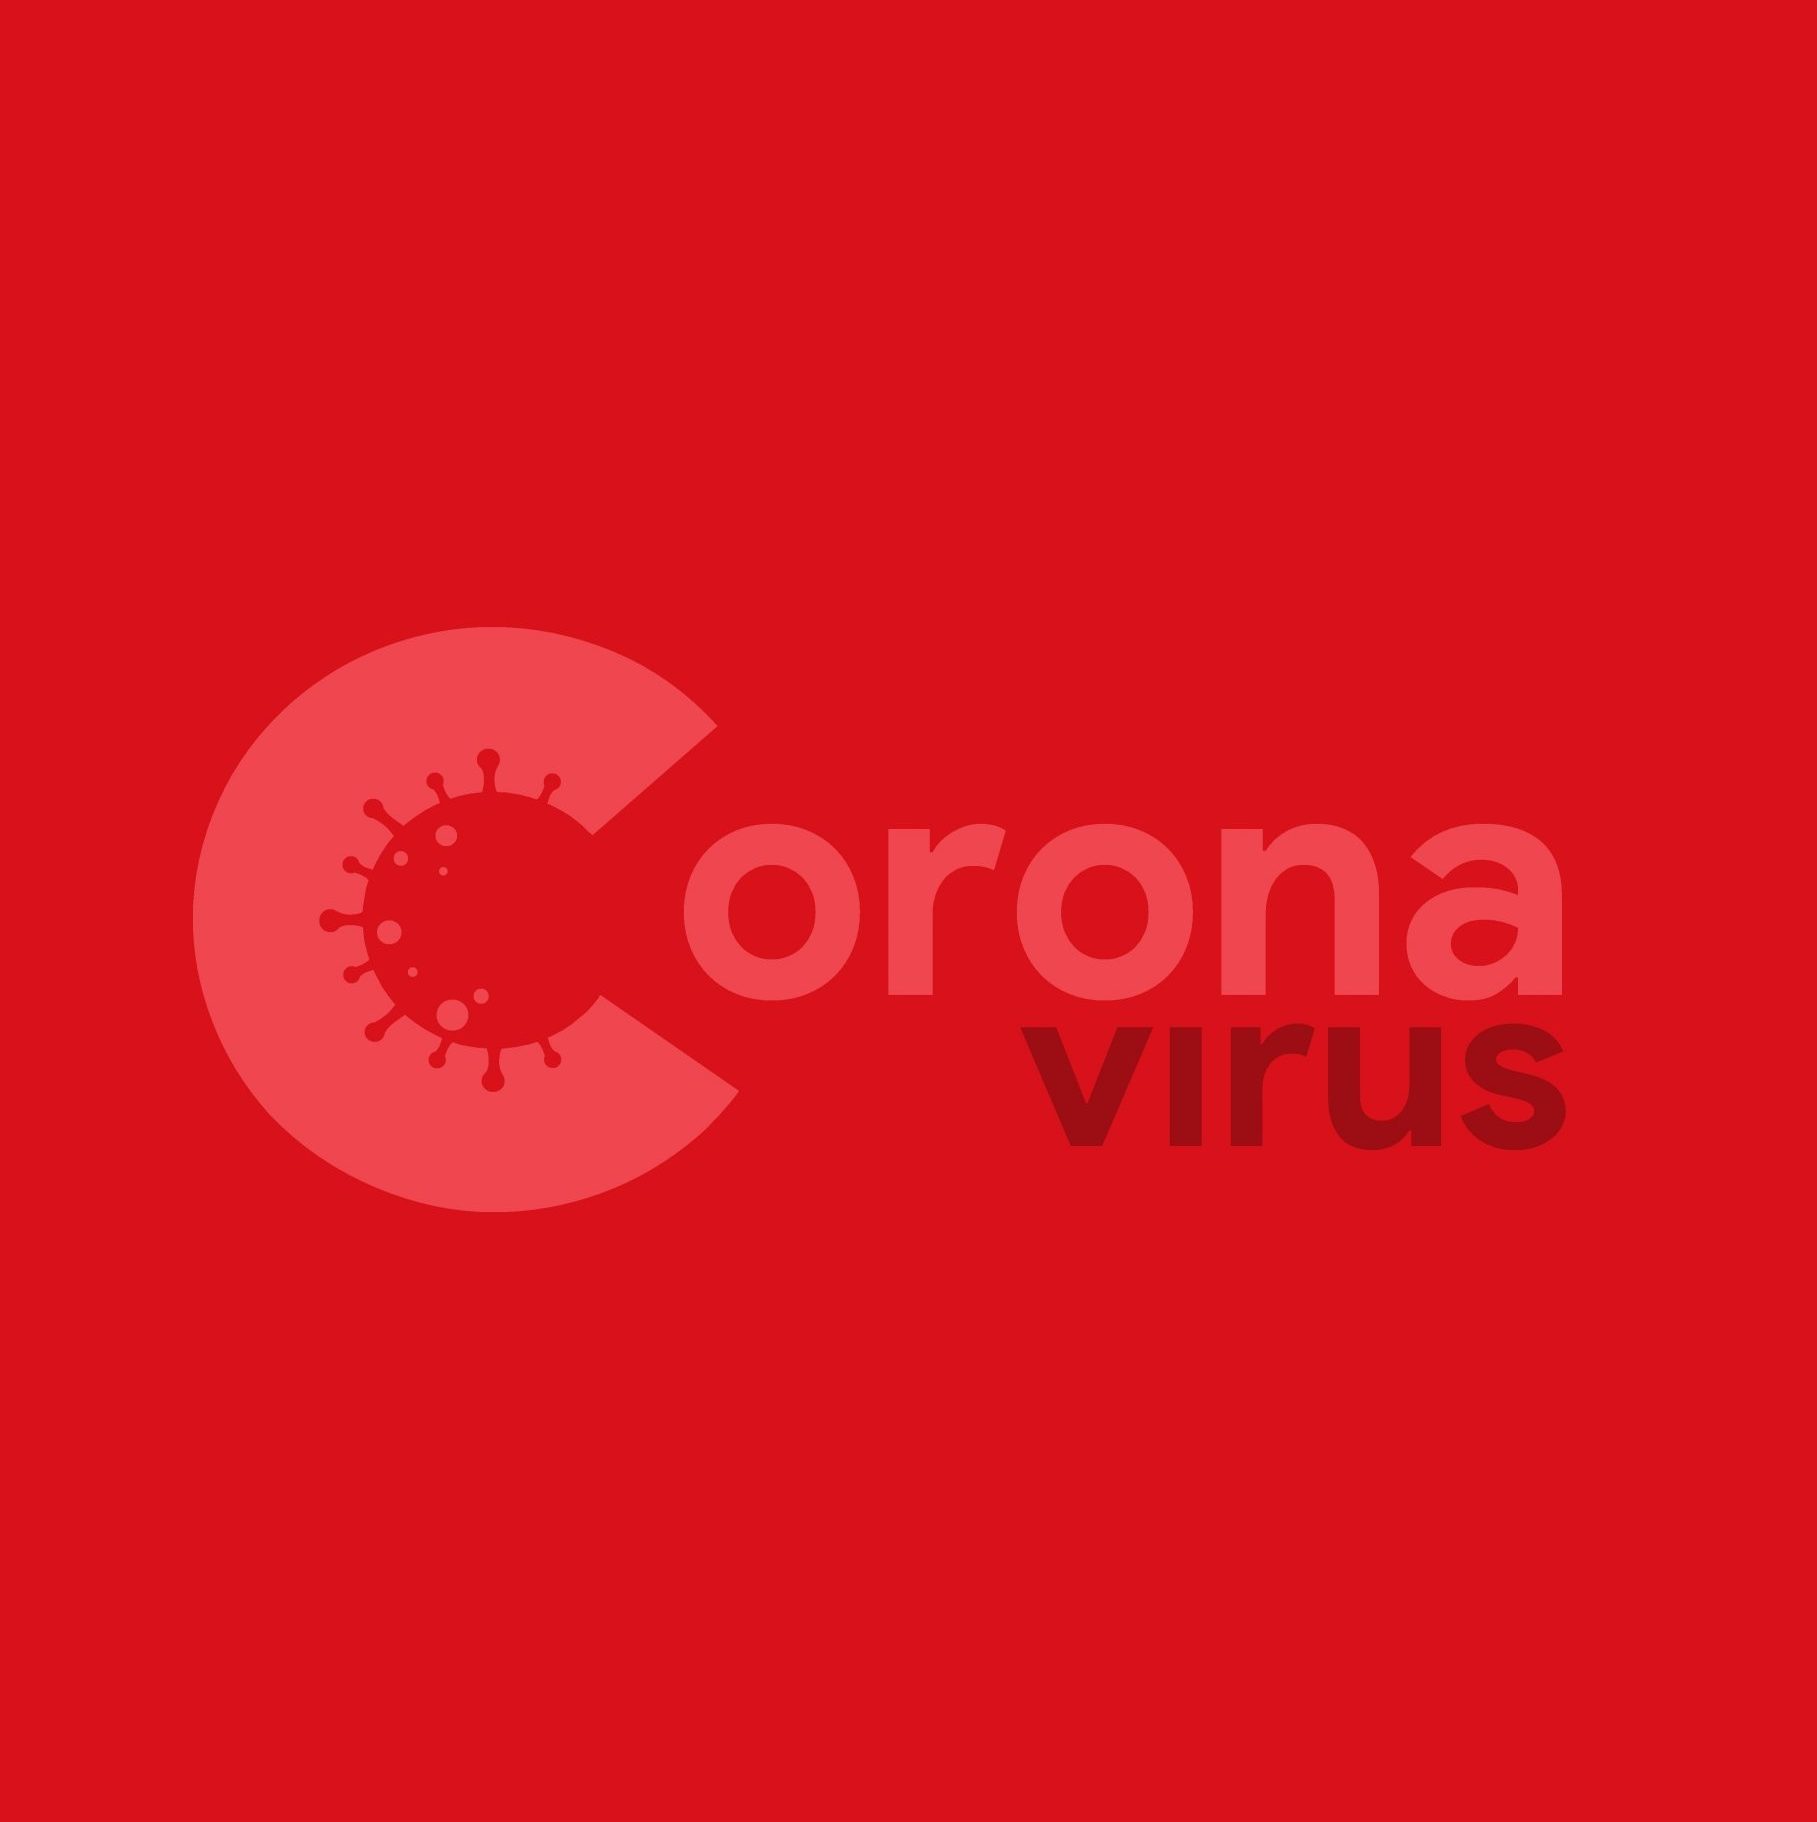 Impact of coronavirus on businesses